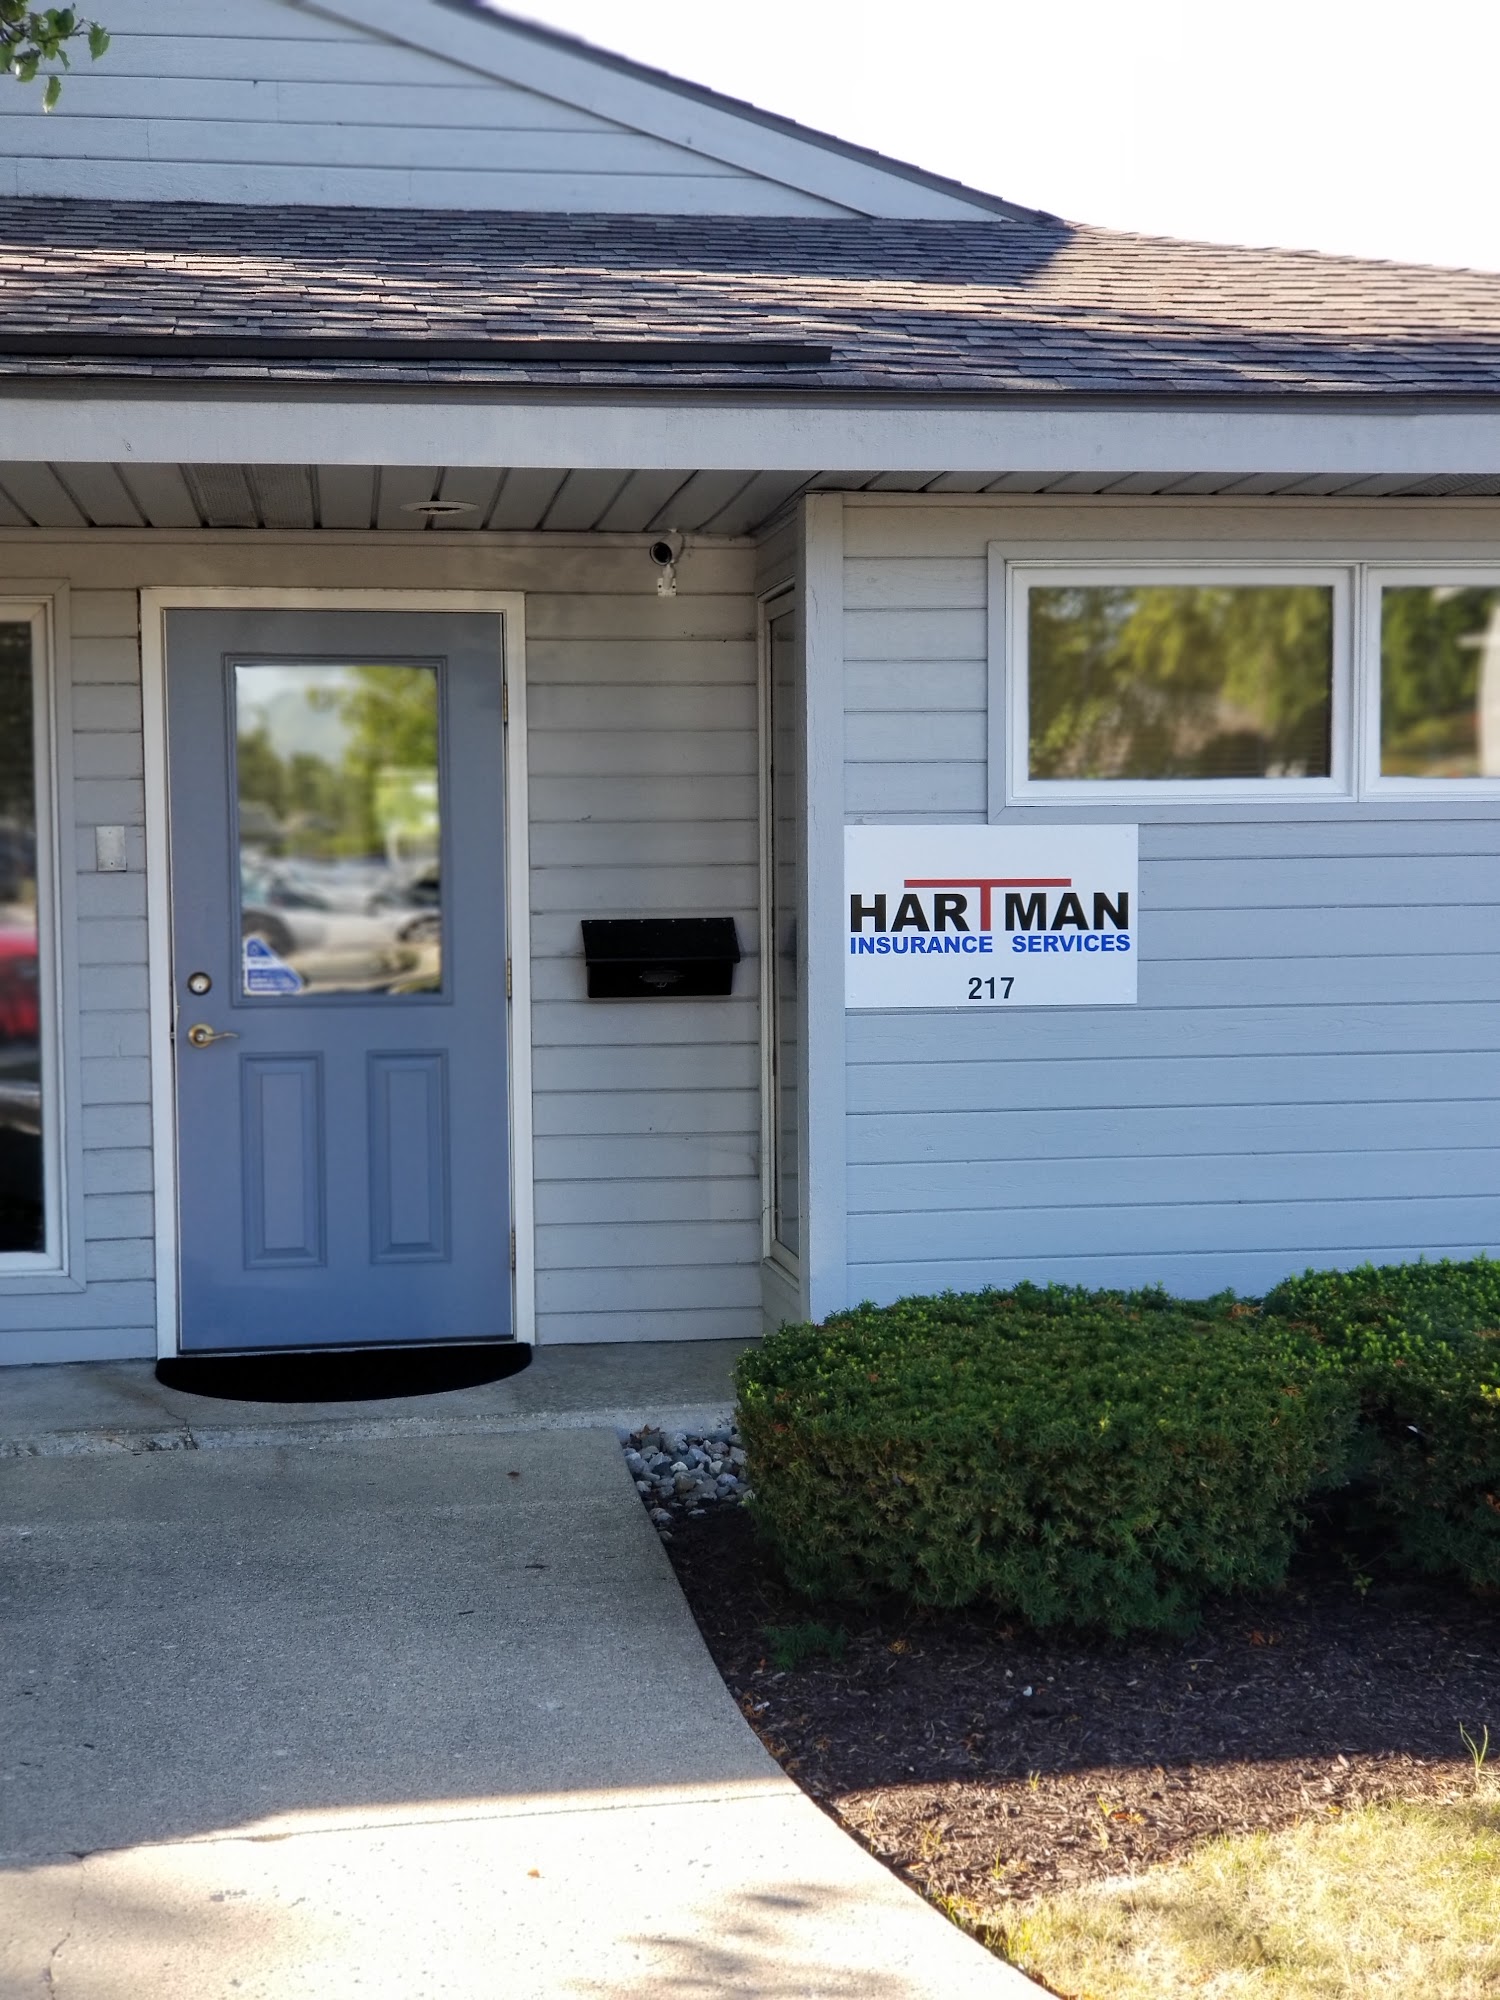 Hartman Insurance Services